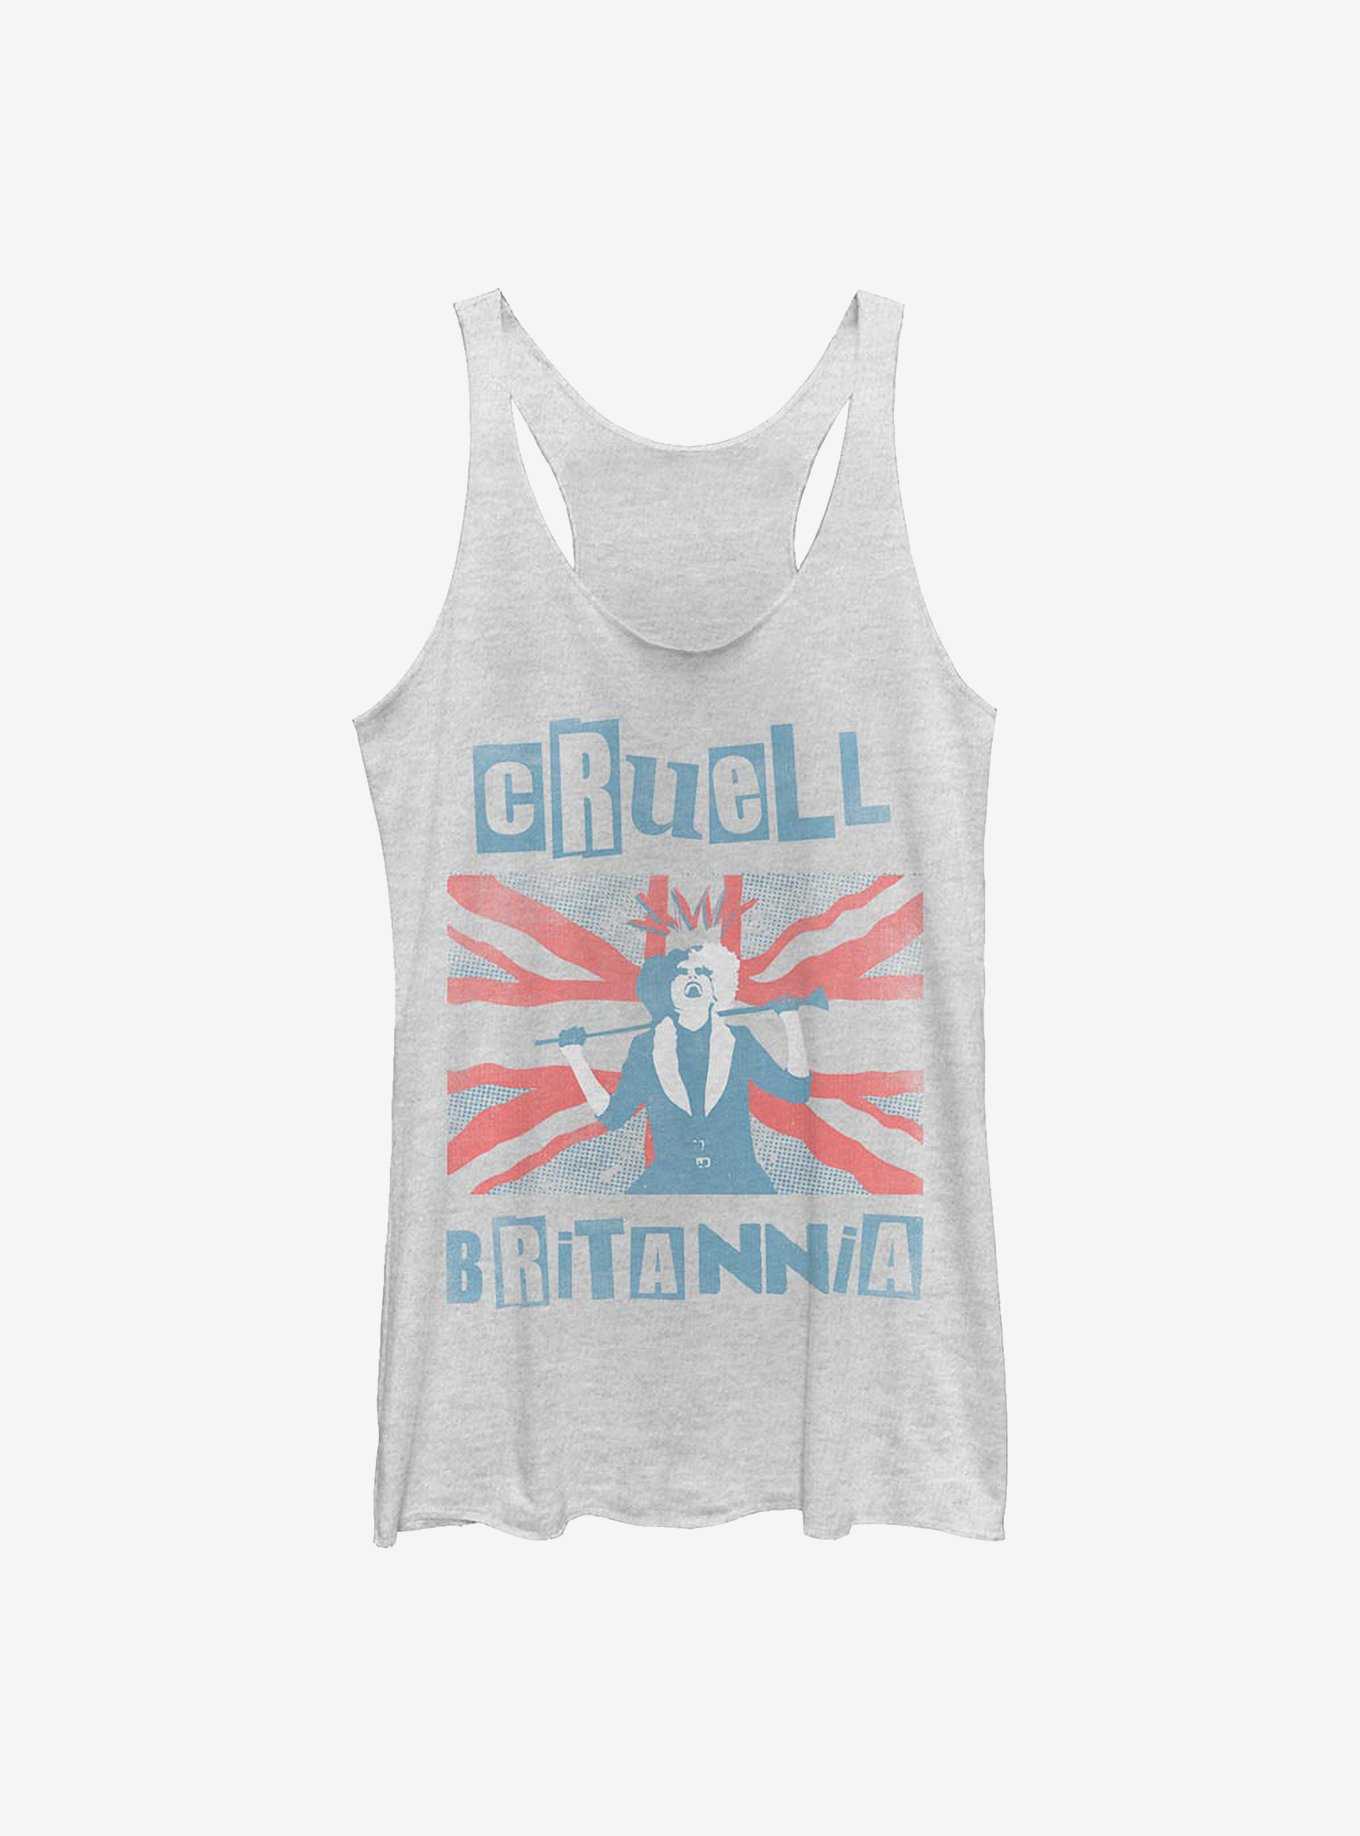 Disney Cruella Cruell Britannia Girls Tank, , hi-res